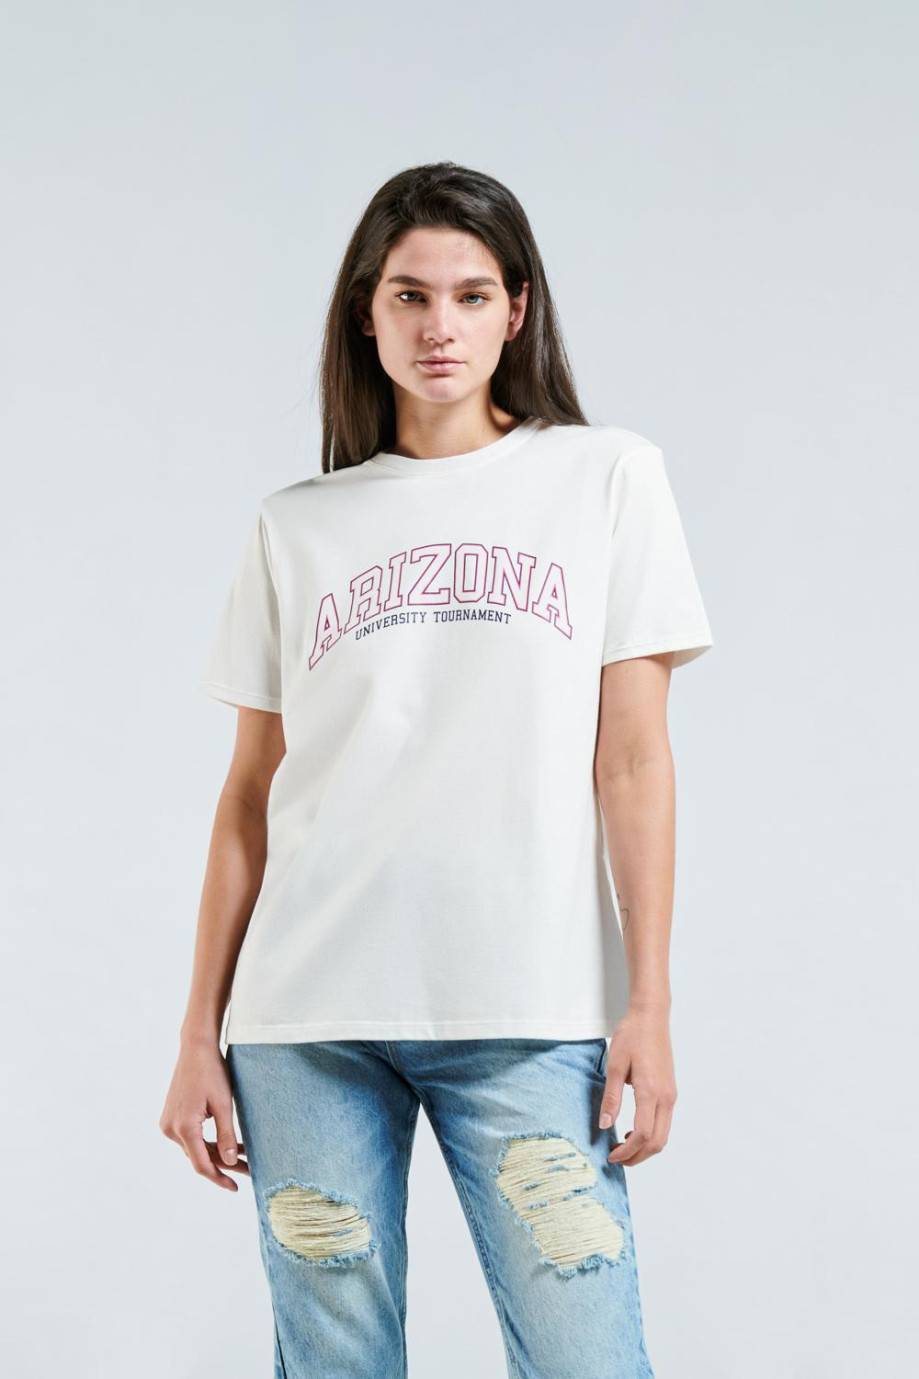 Camiseta cuello redondo unicolor con texto college de Arizona en frente